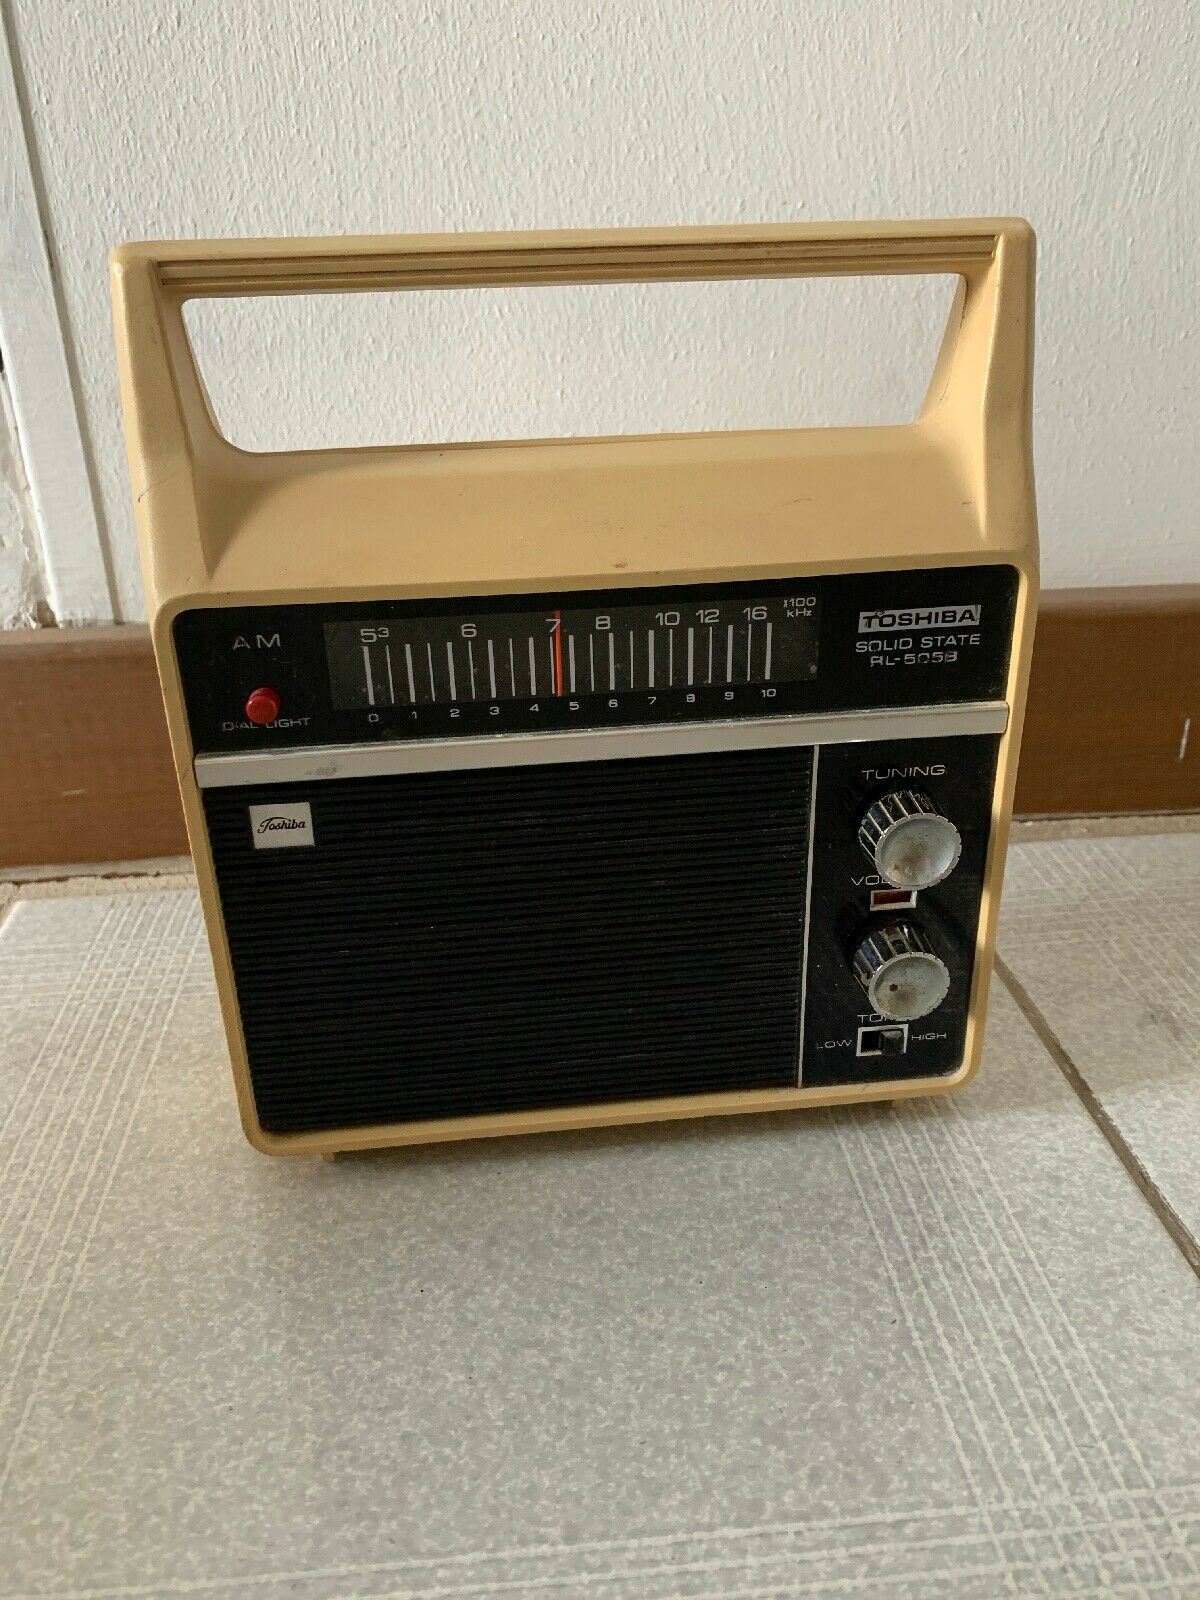 Toshiba Solid State Radio RL-505 B Vintage AM Radio